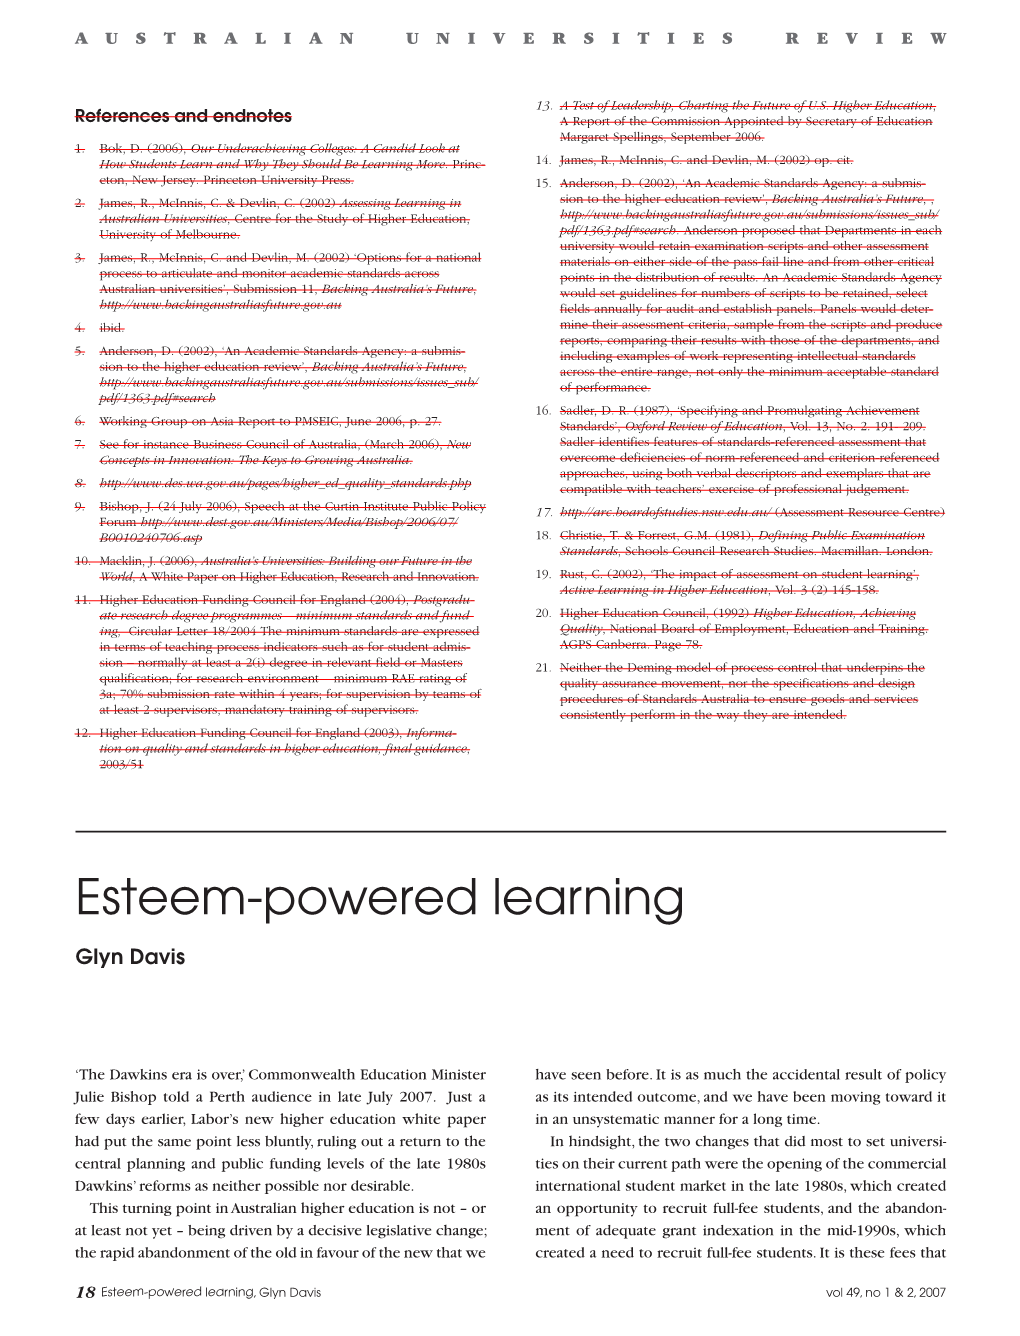 Esteem-Powered Learning